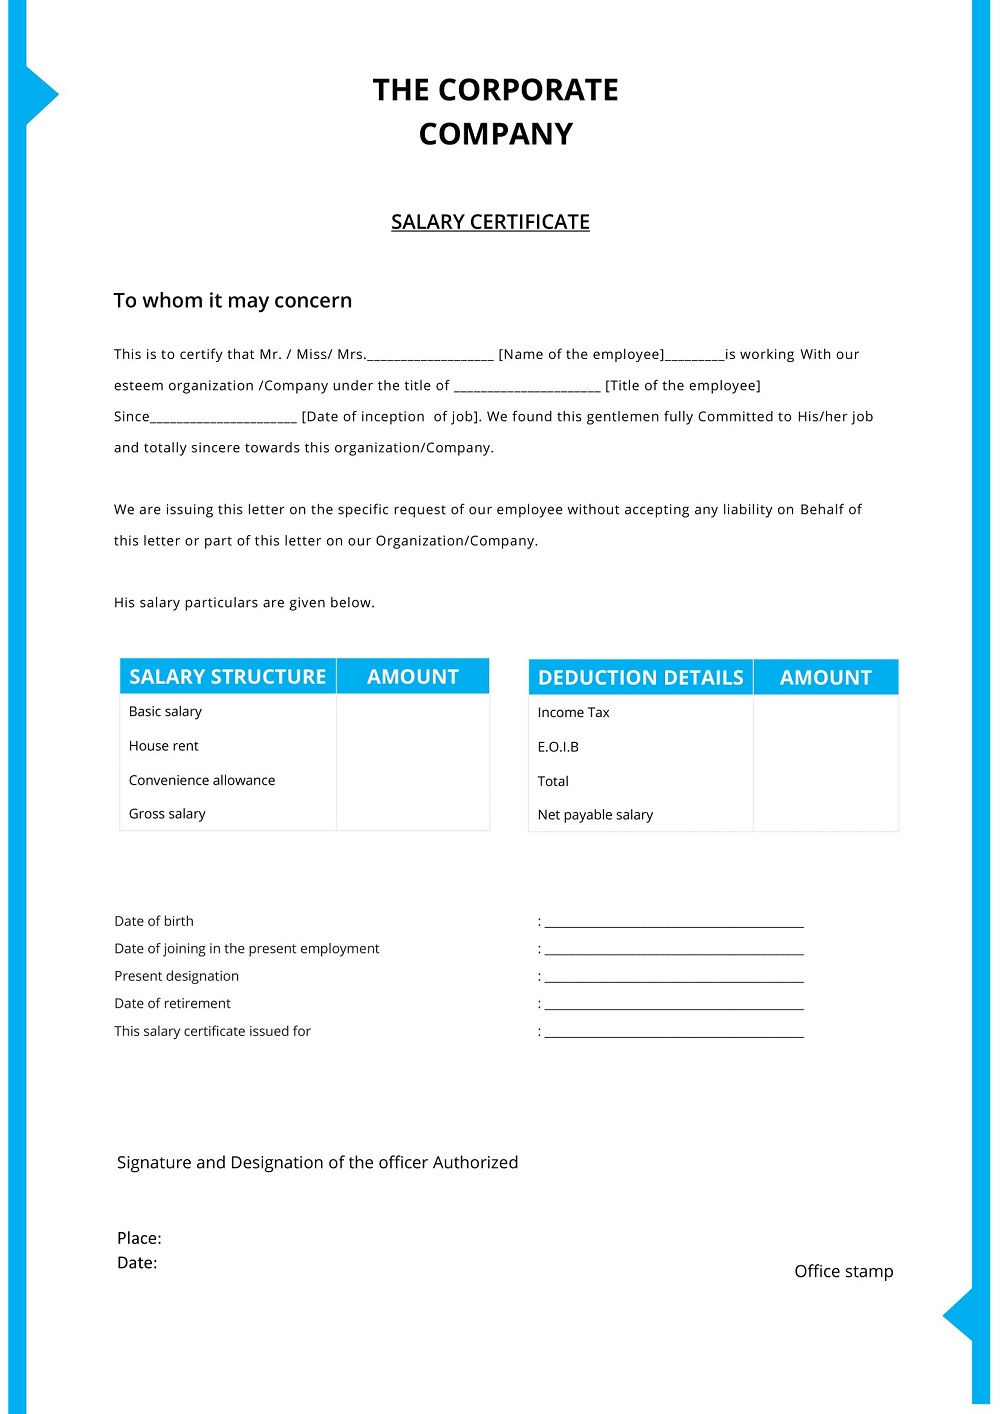 Corporate Company Salary Certificate